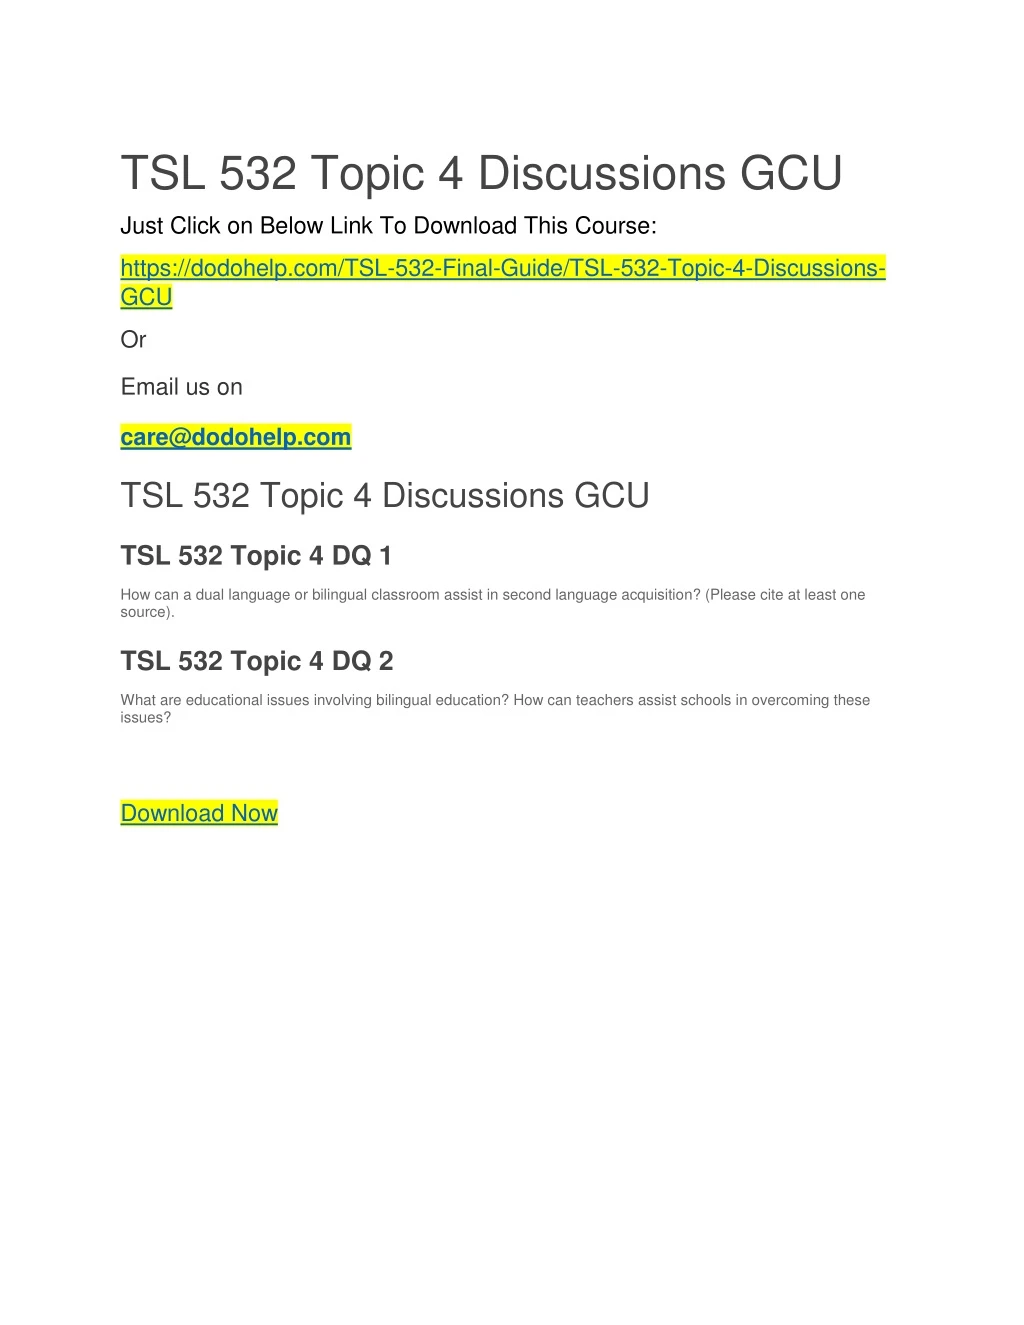 tsl 532 topic 4 discussions gcu just click